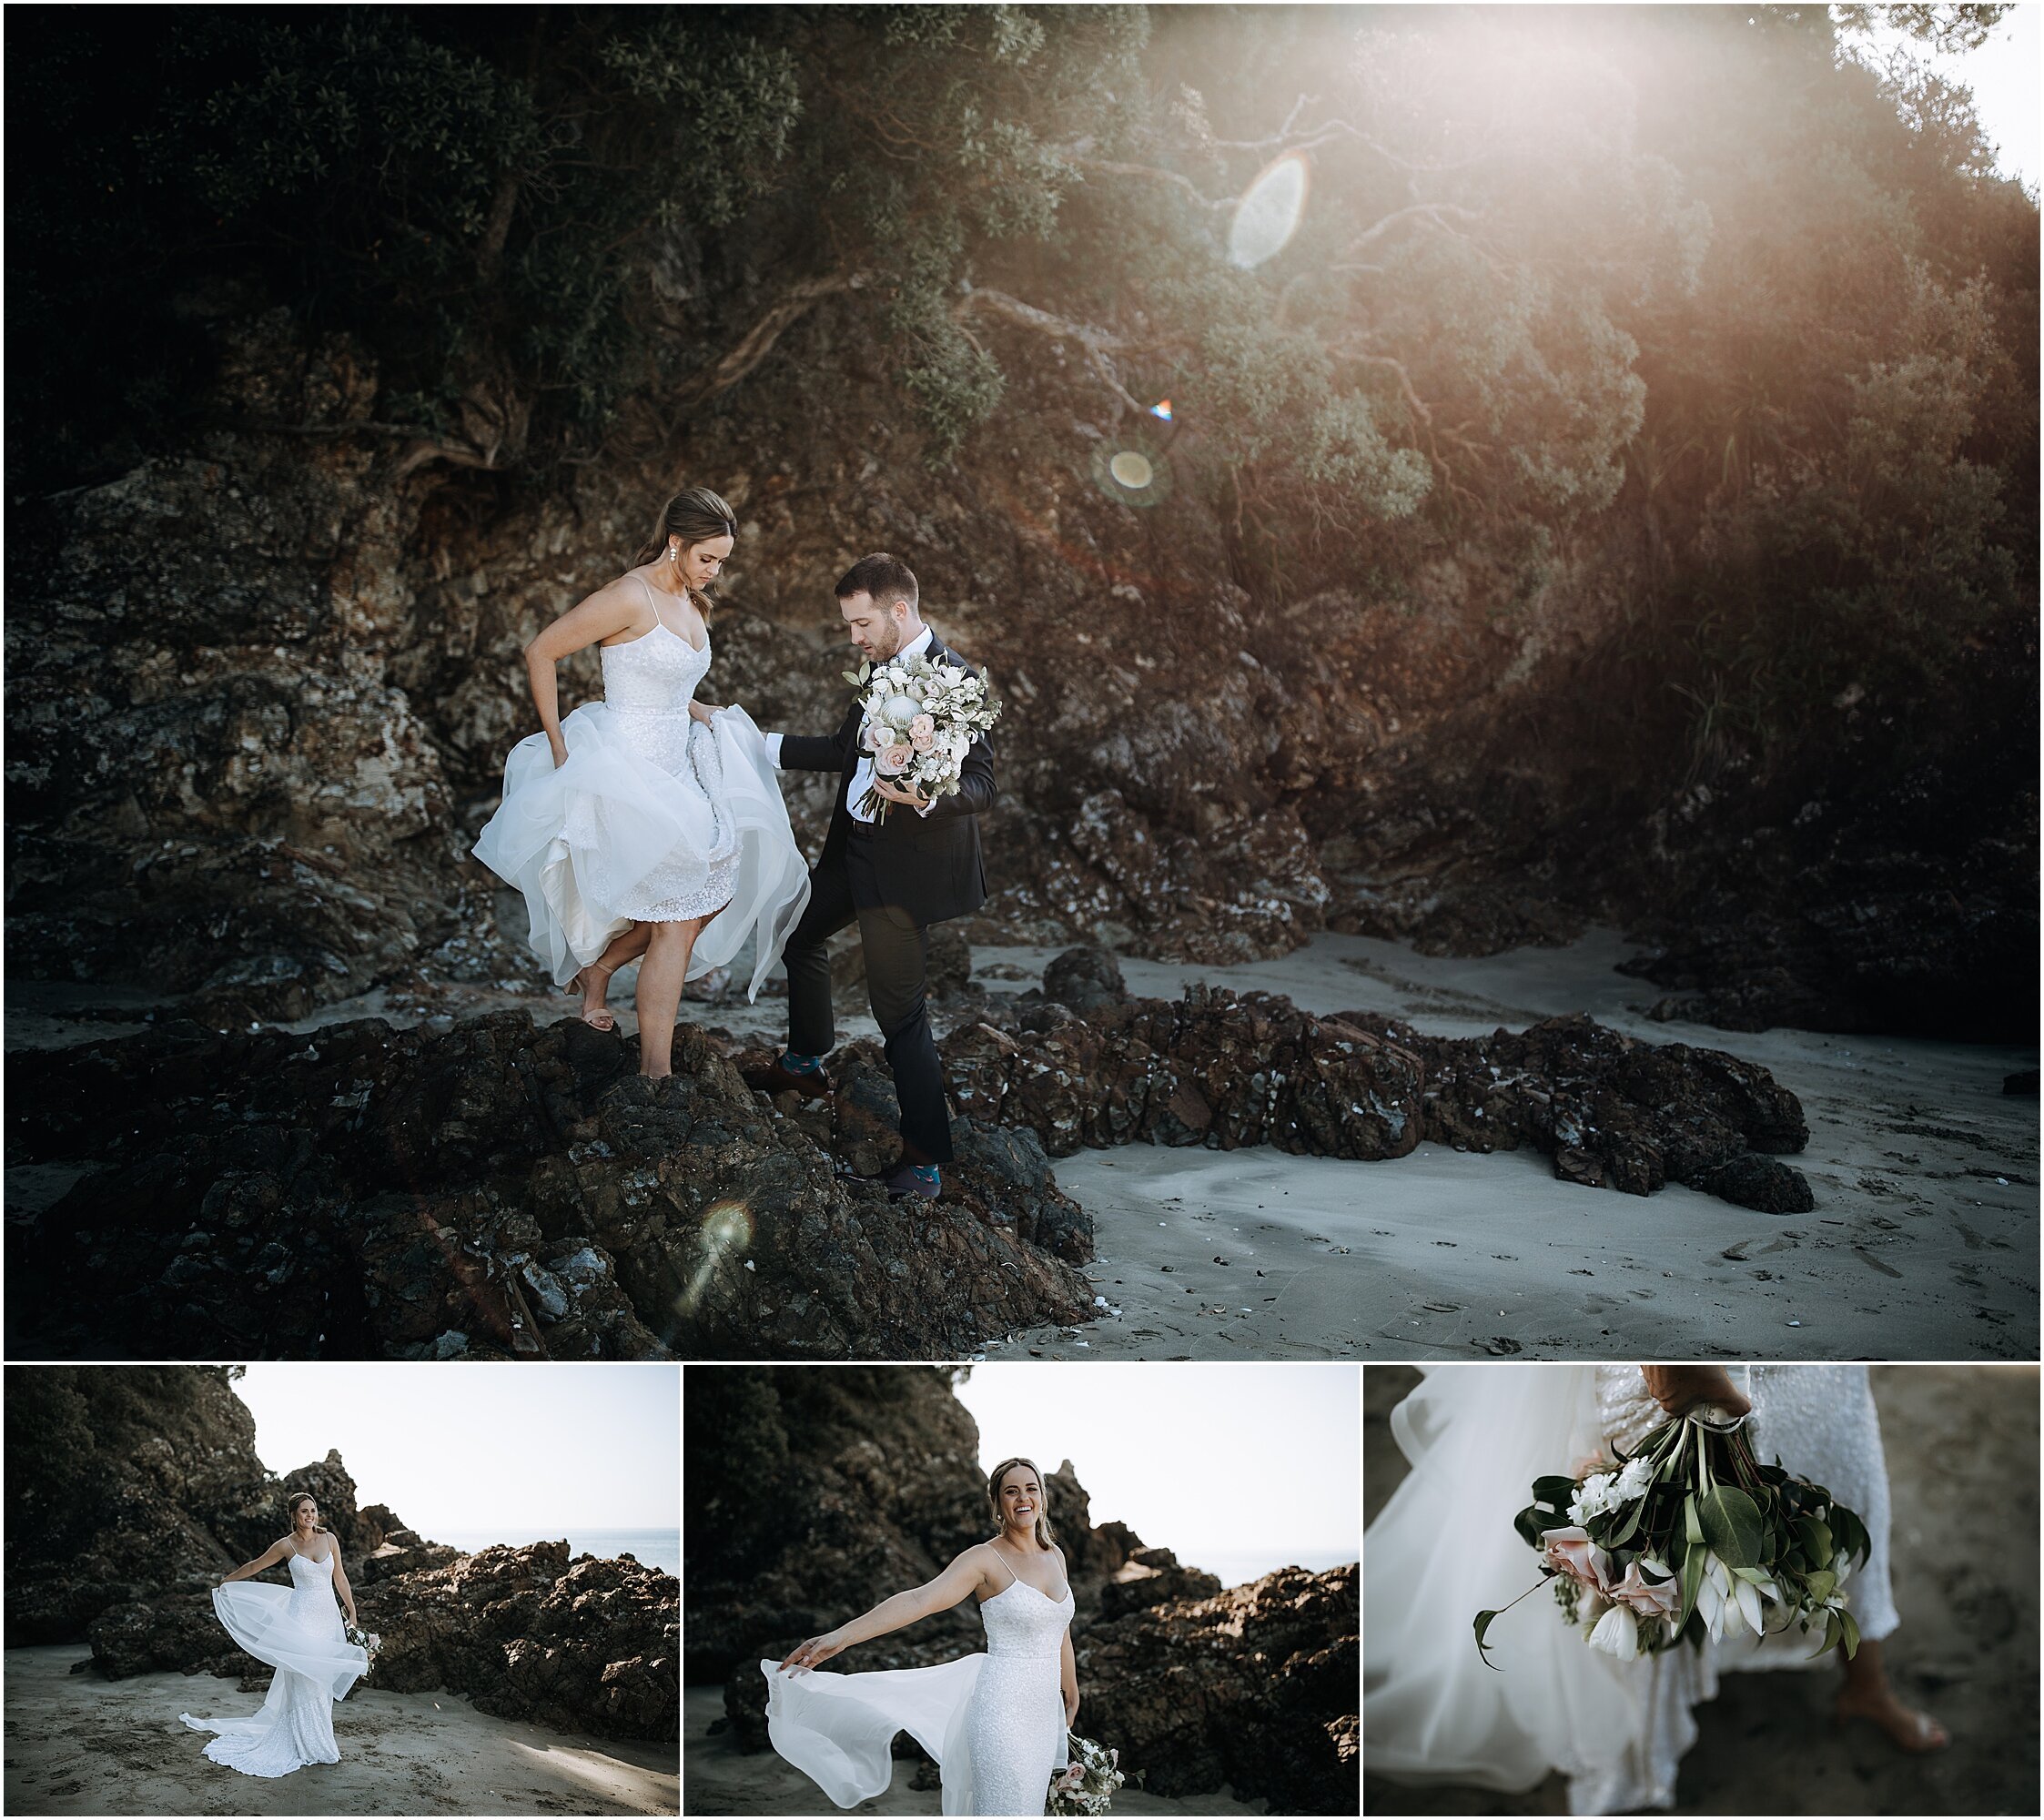 Zanda+Auckland+wedding+photographer+chic+vibrant+Cable+Bay+vineyard+venue+Waiheke+Island+New+Zealand_33.jpeg